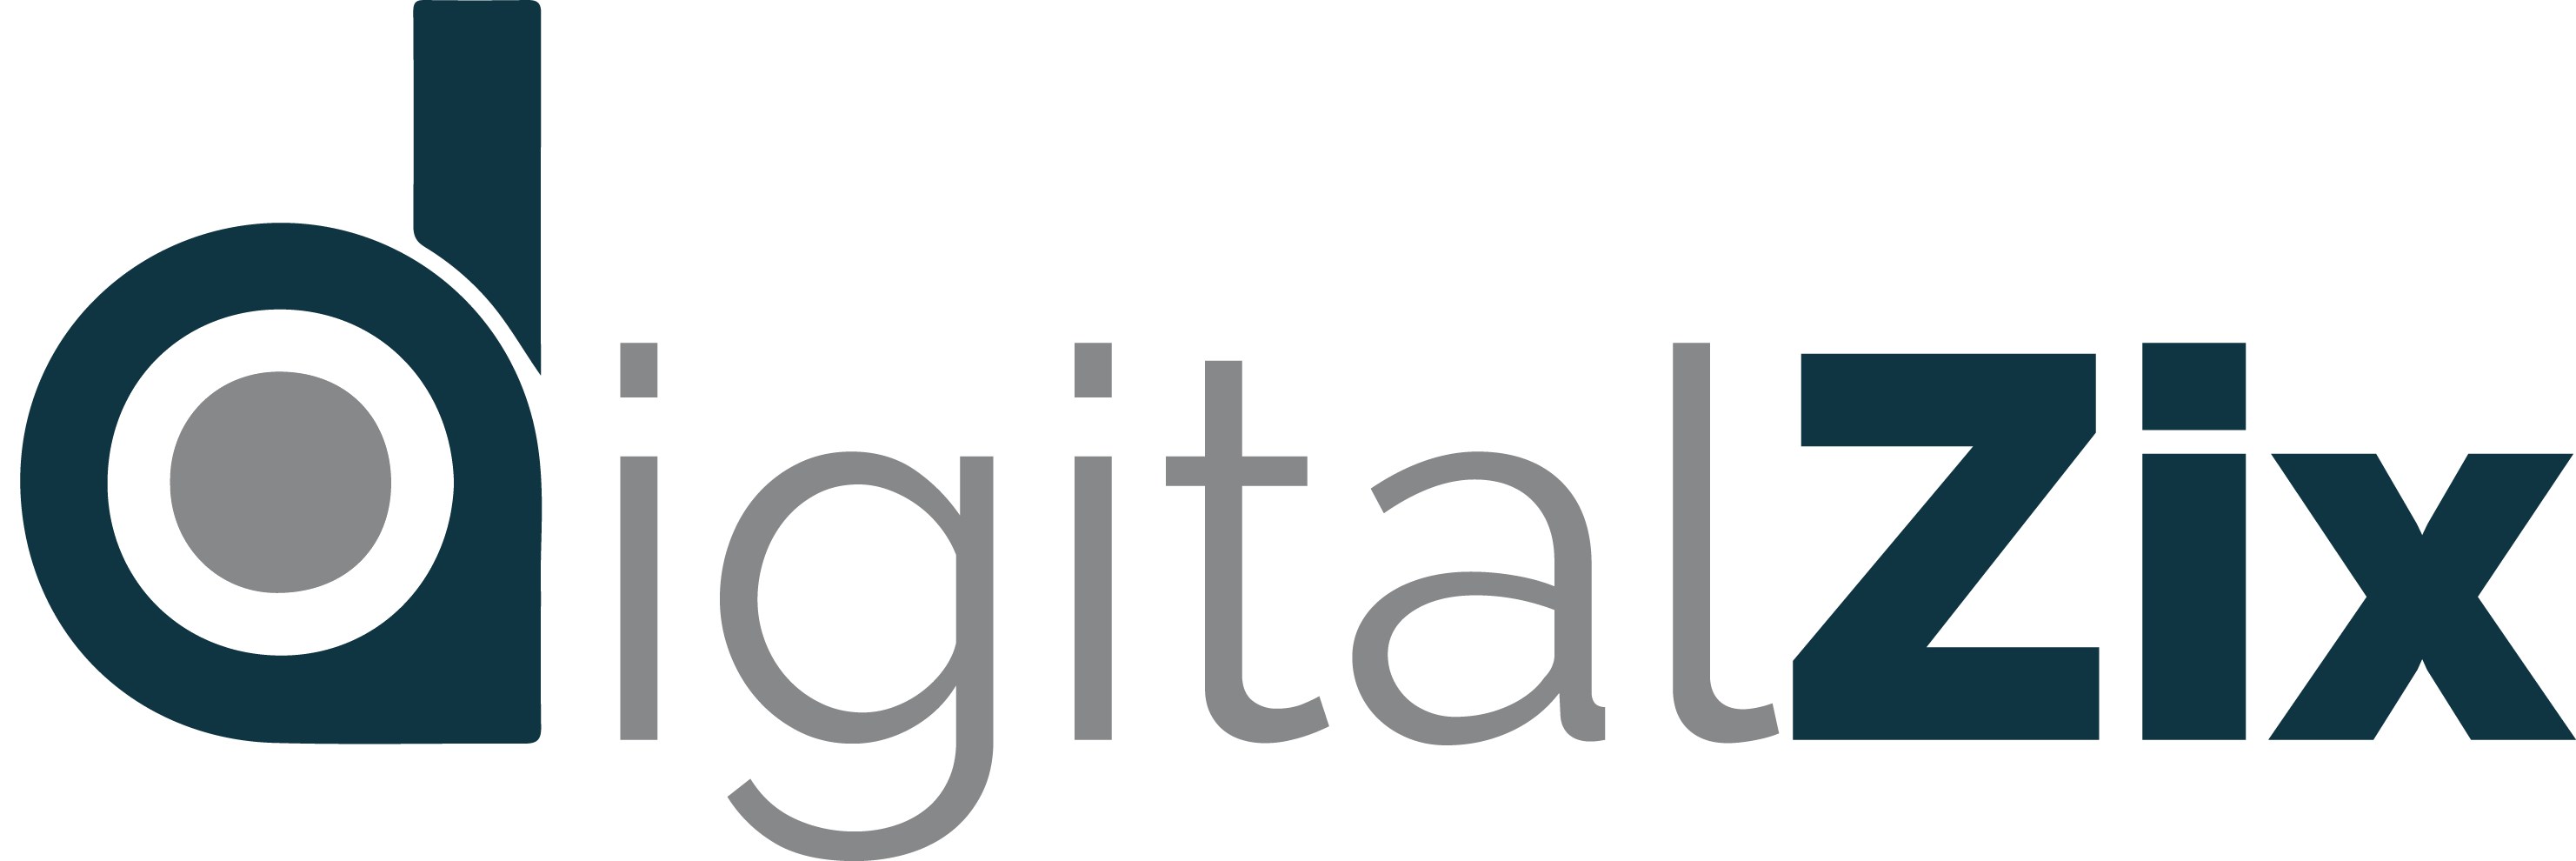 About DigitalZix